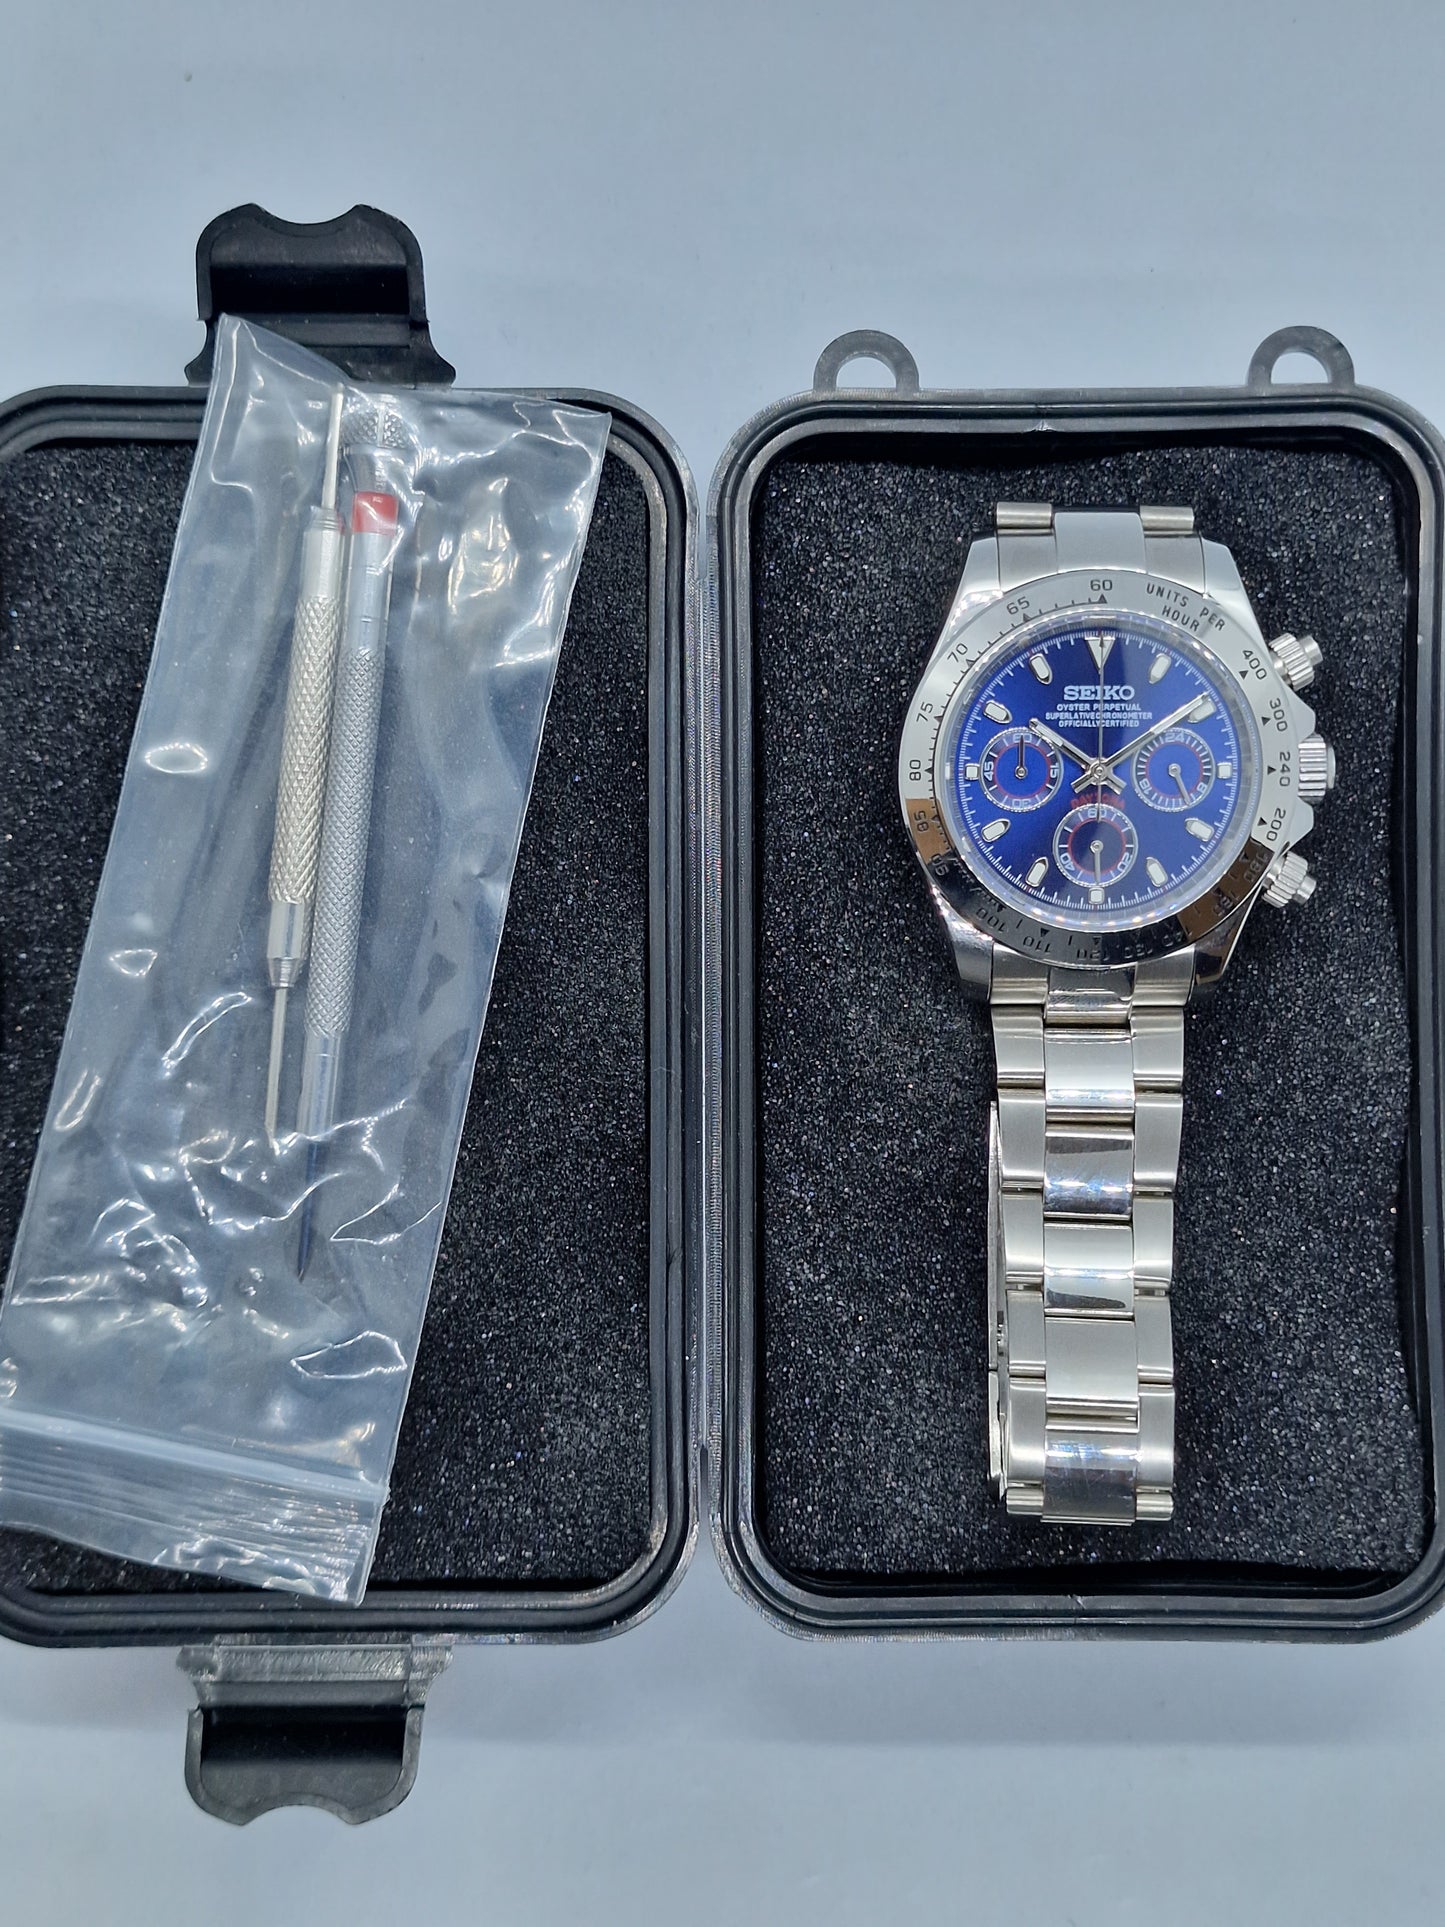 Seiko Mod Daytona cronografo blu Vk63 quarzo 40 mm vetro zaffiro